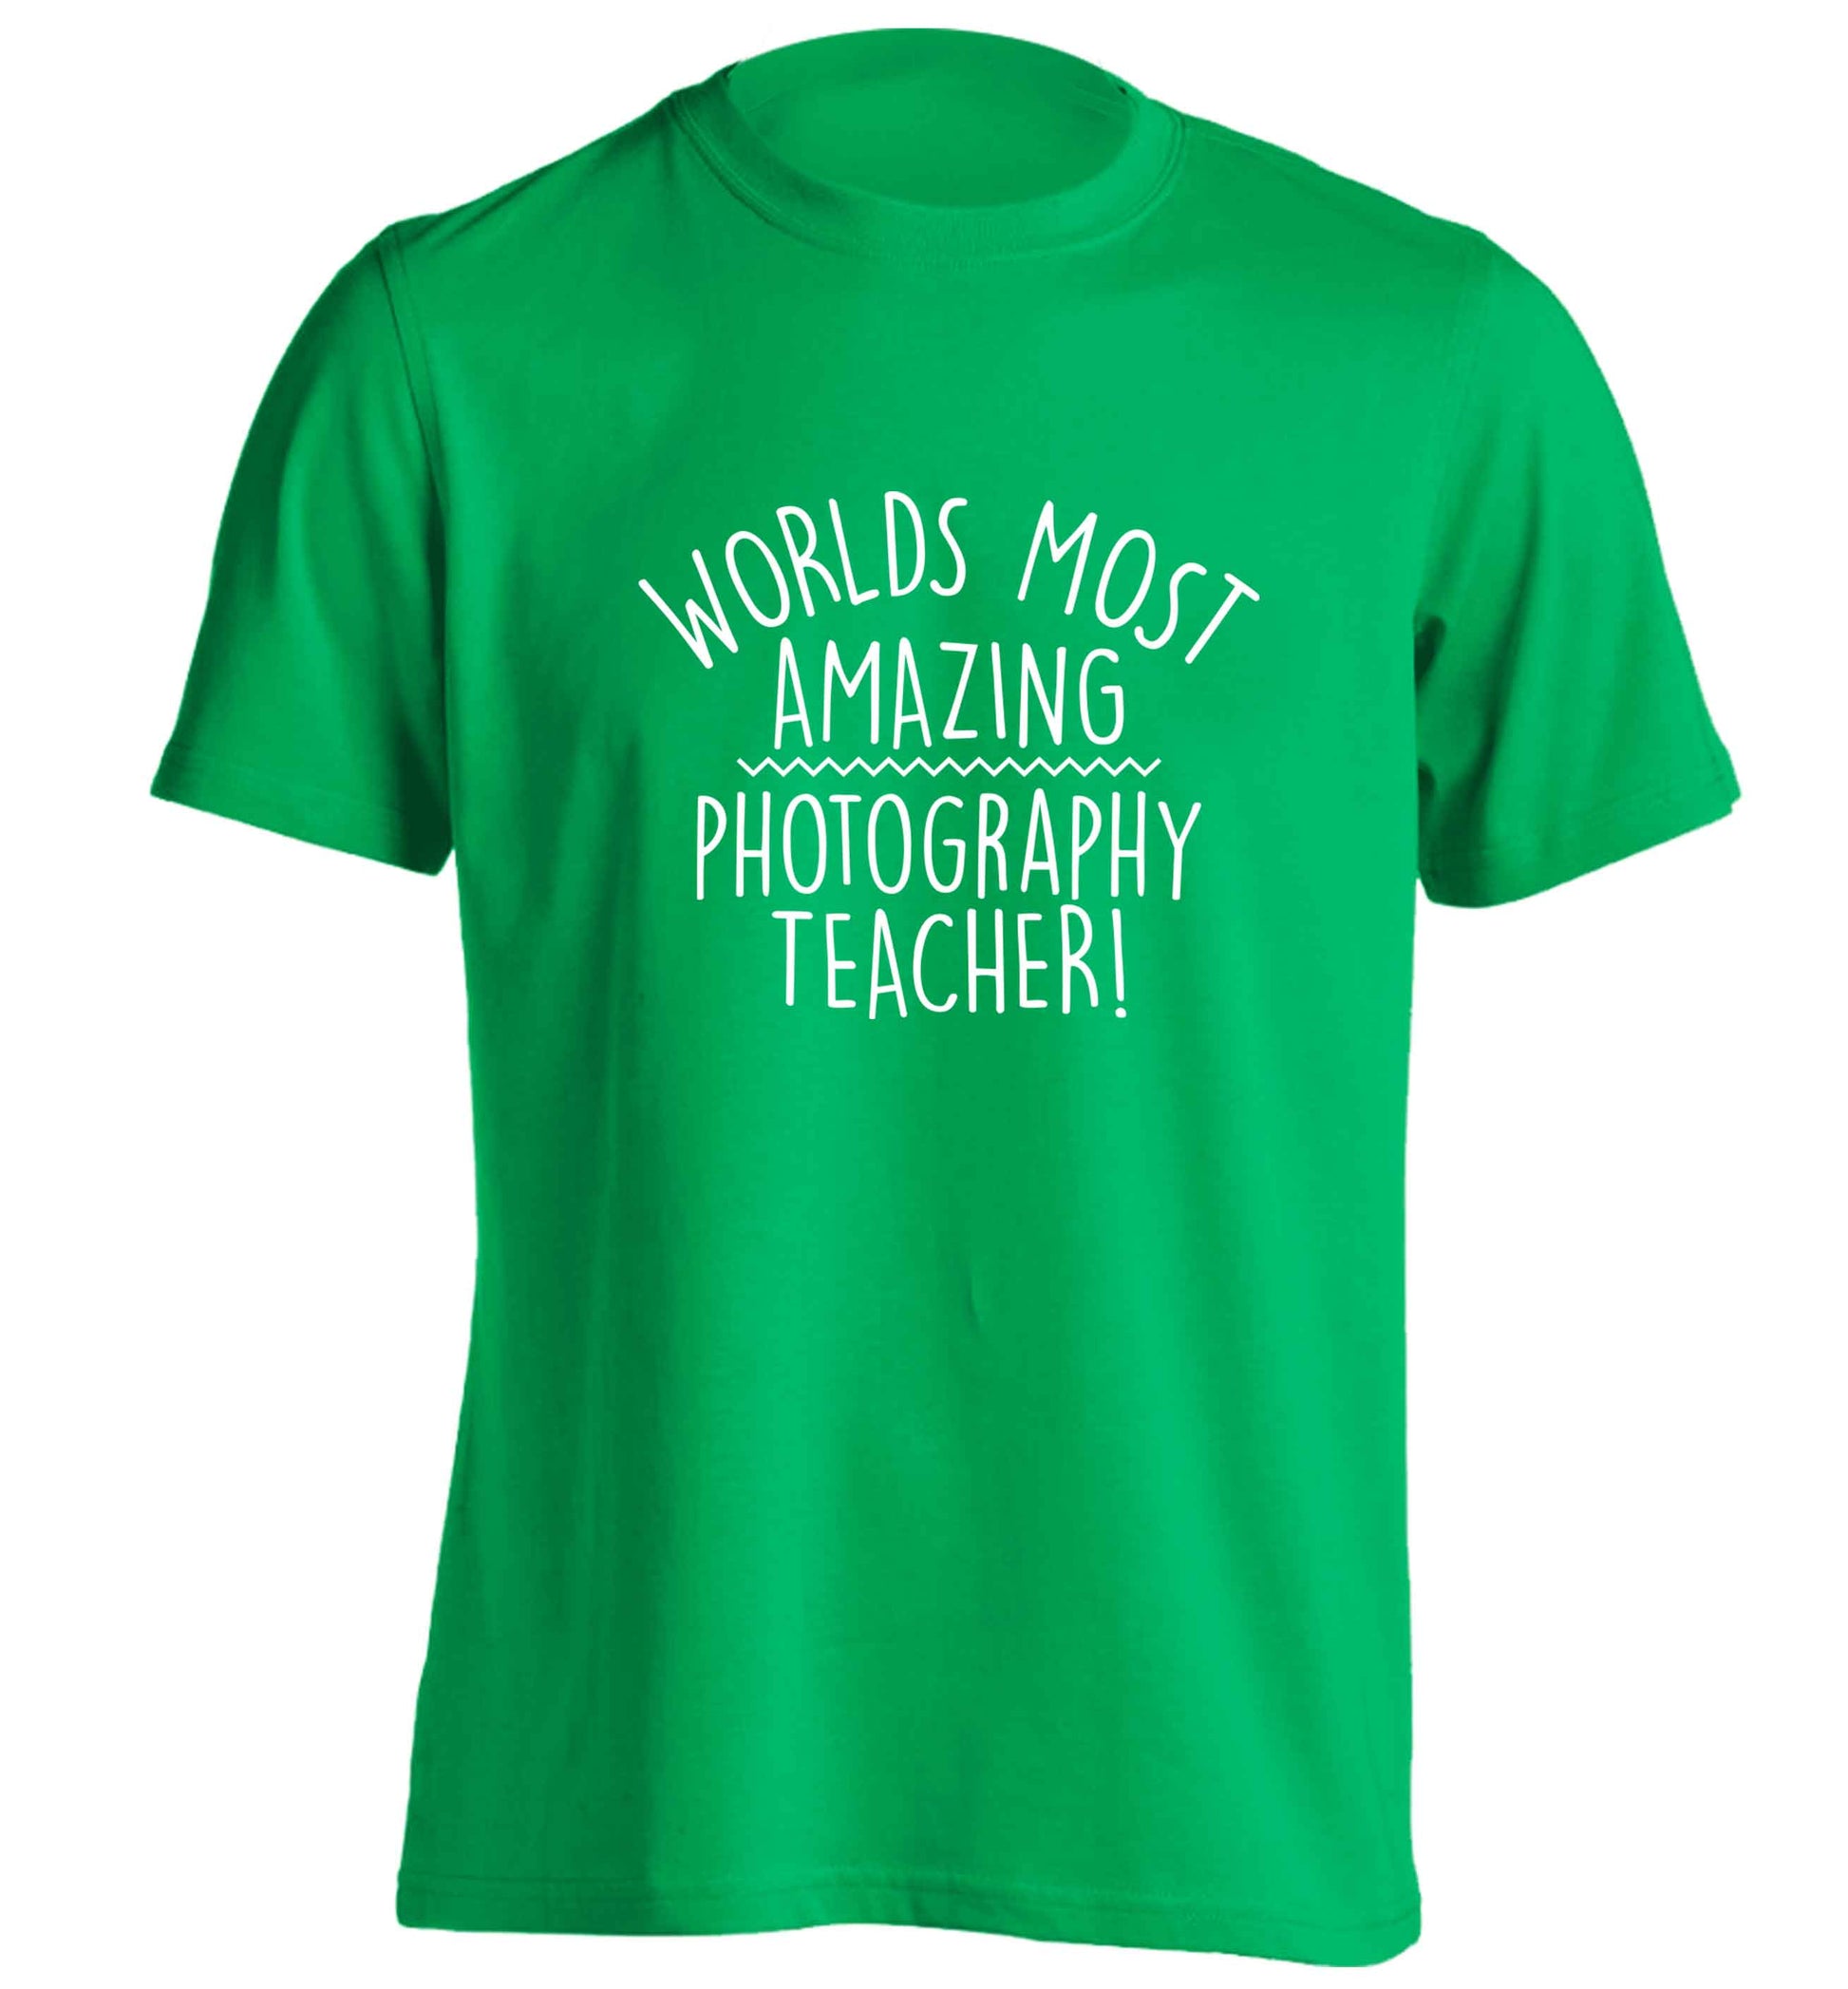 Worlds most amazing photography teacher adults unisex green Tshirt 2XL